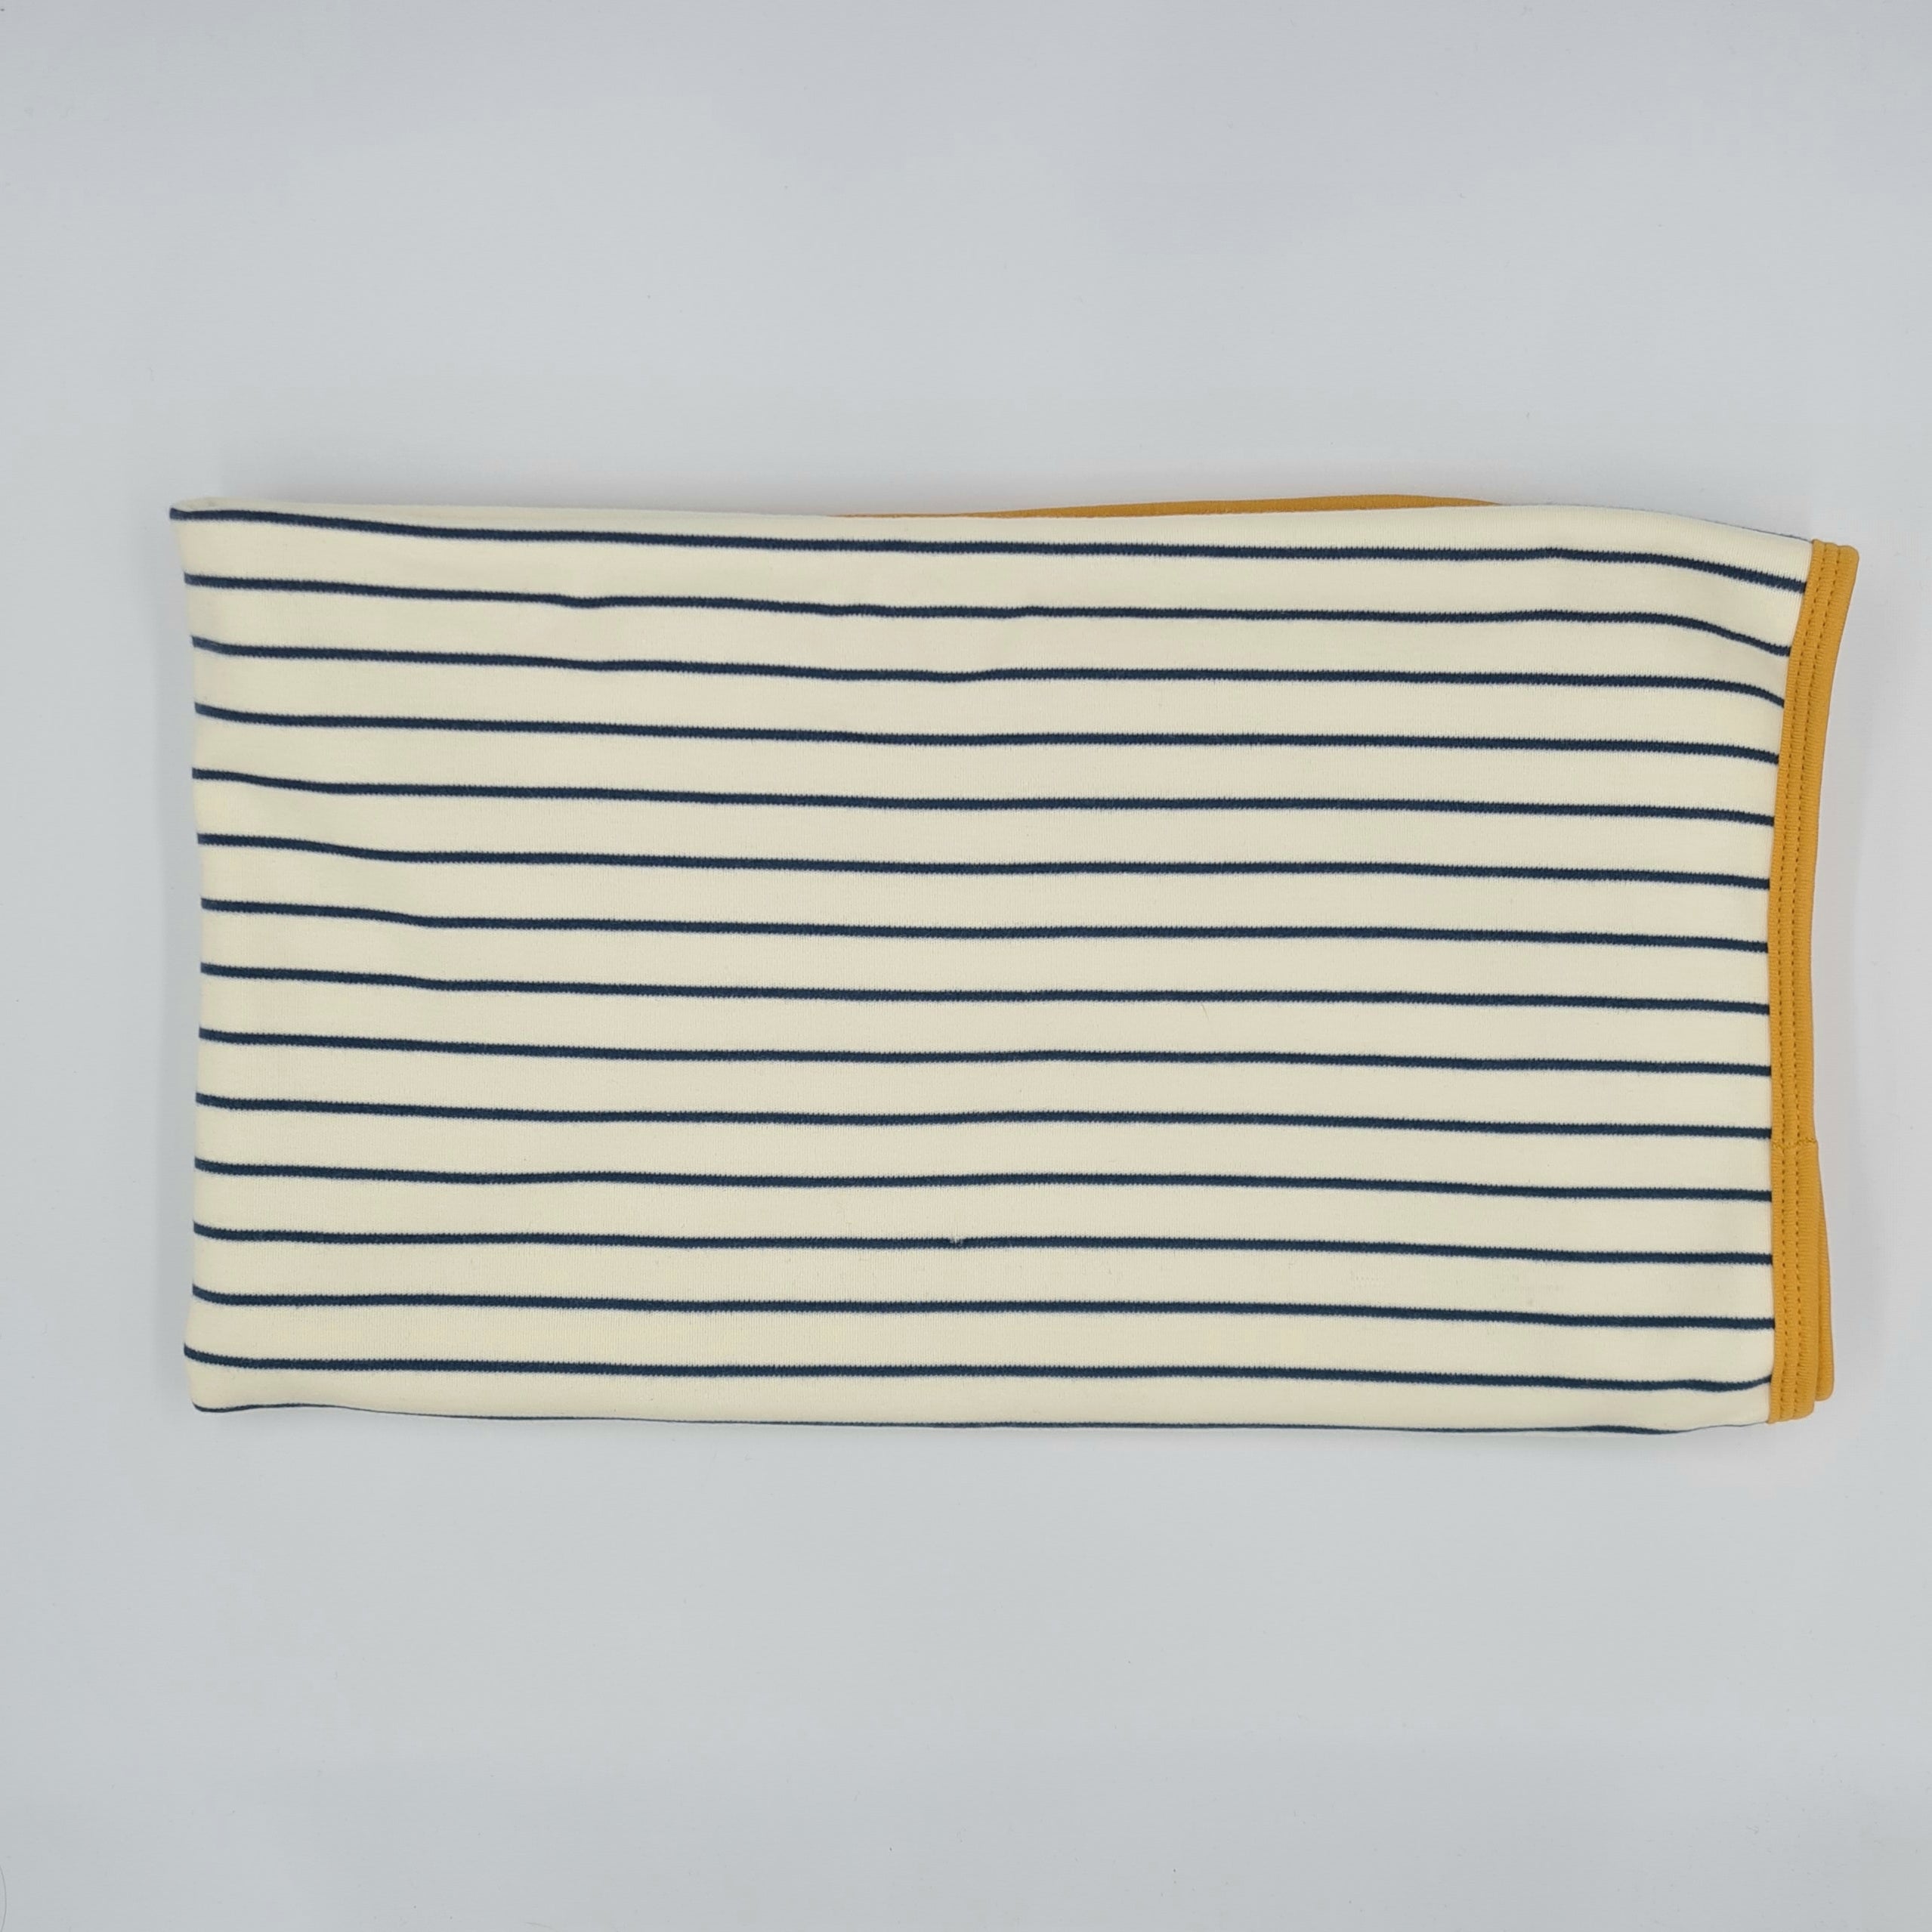 Classic Stripe Blanket